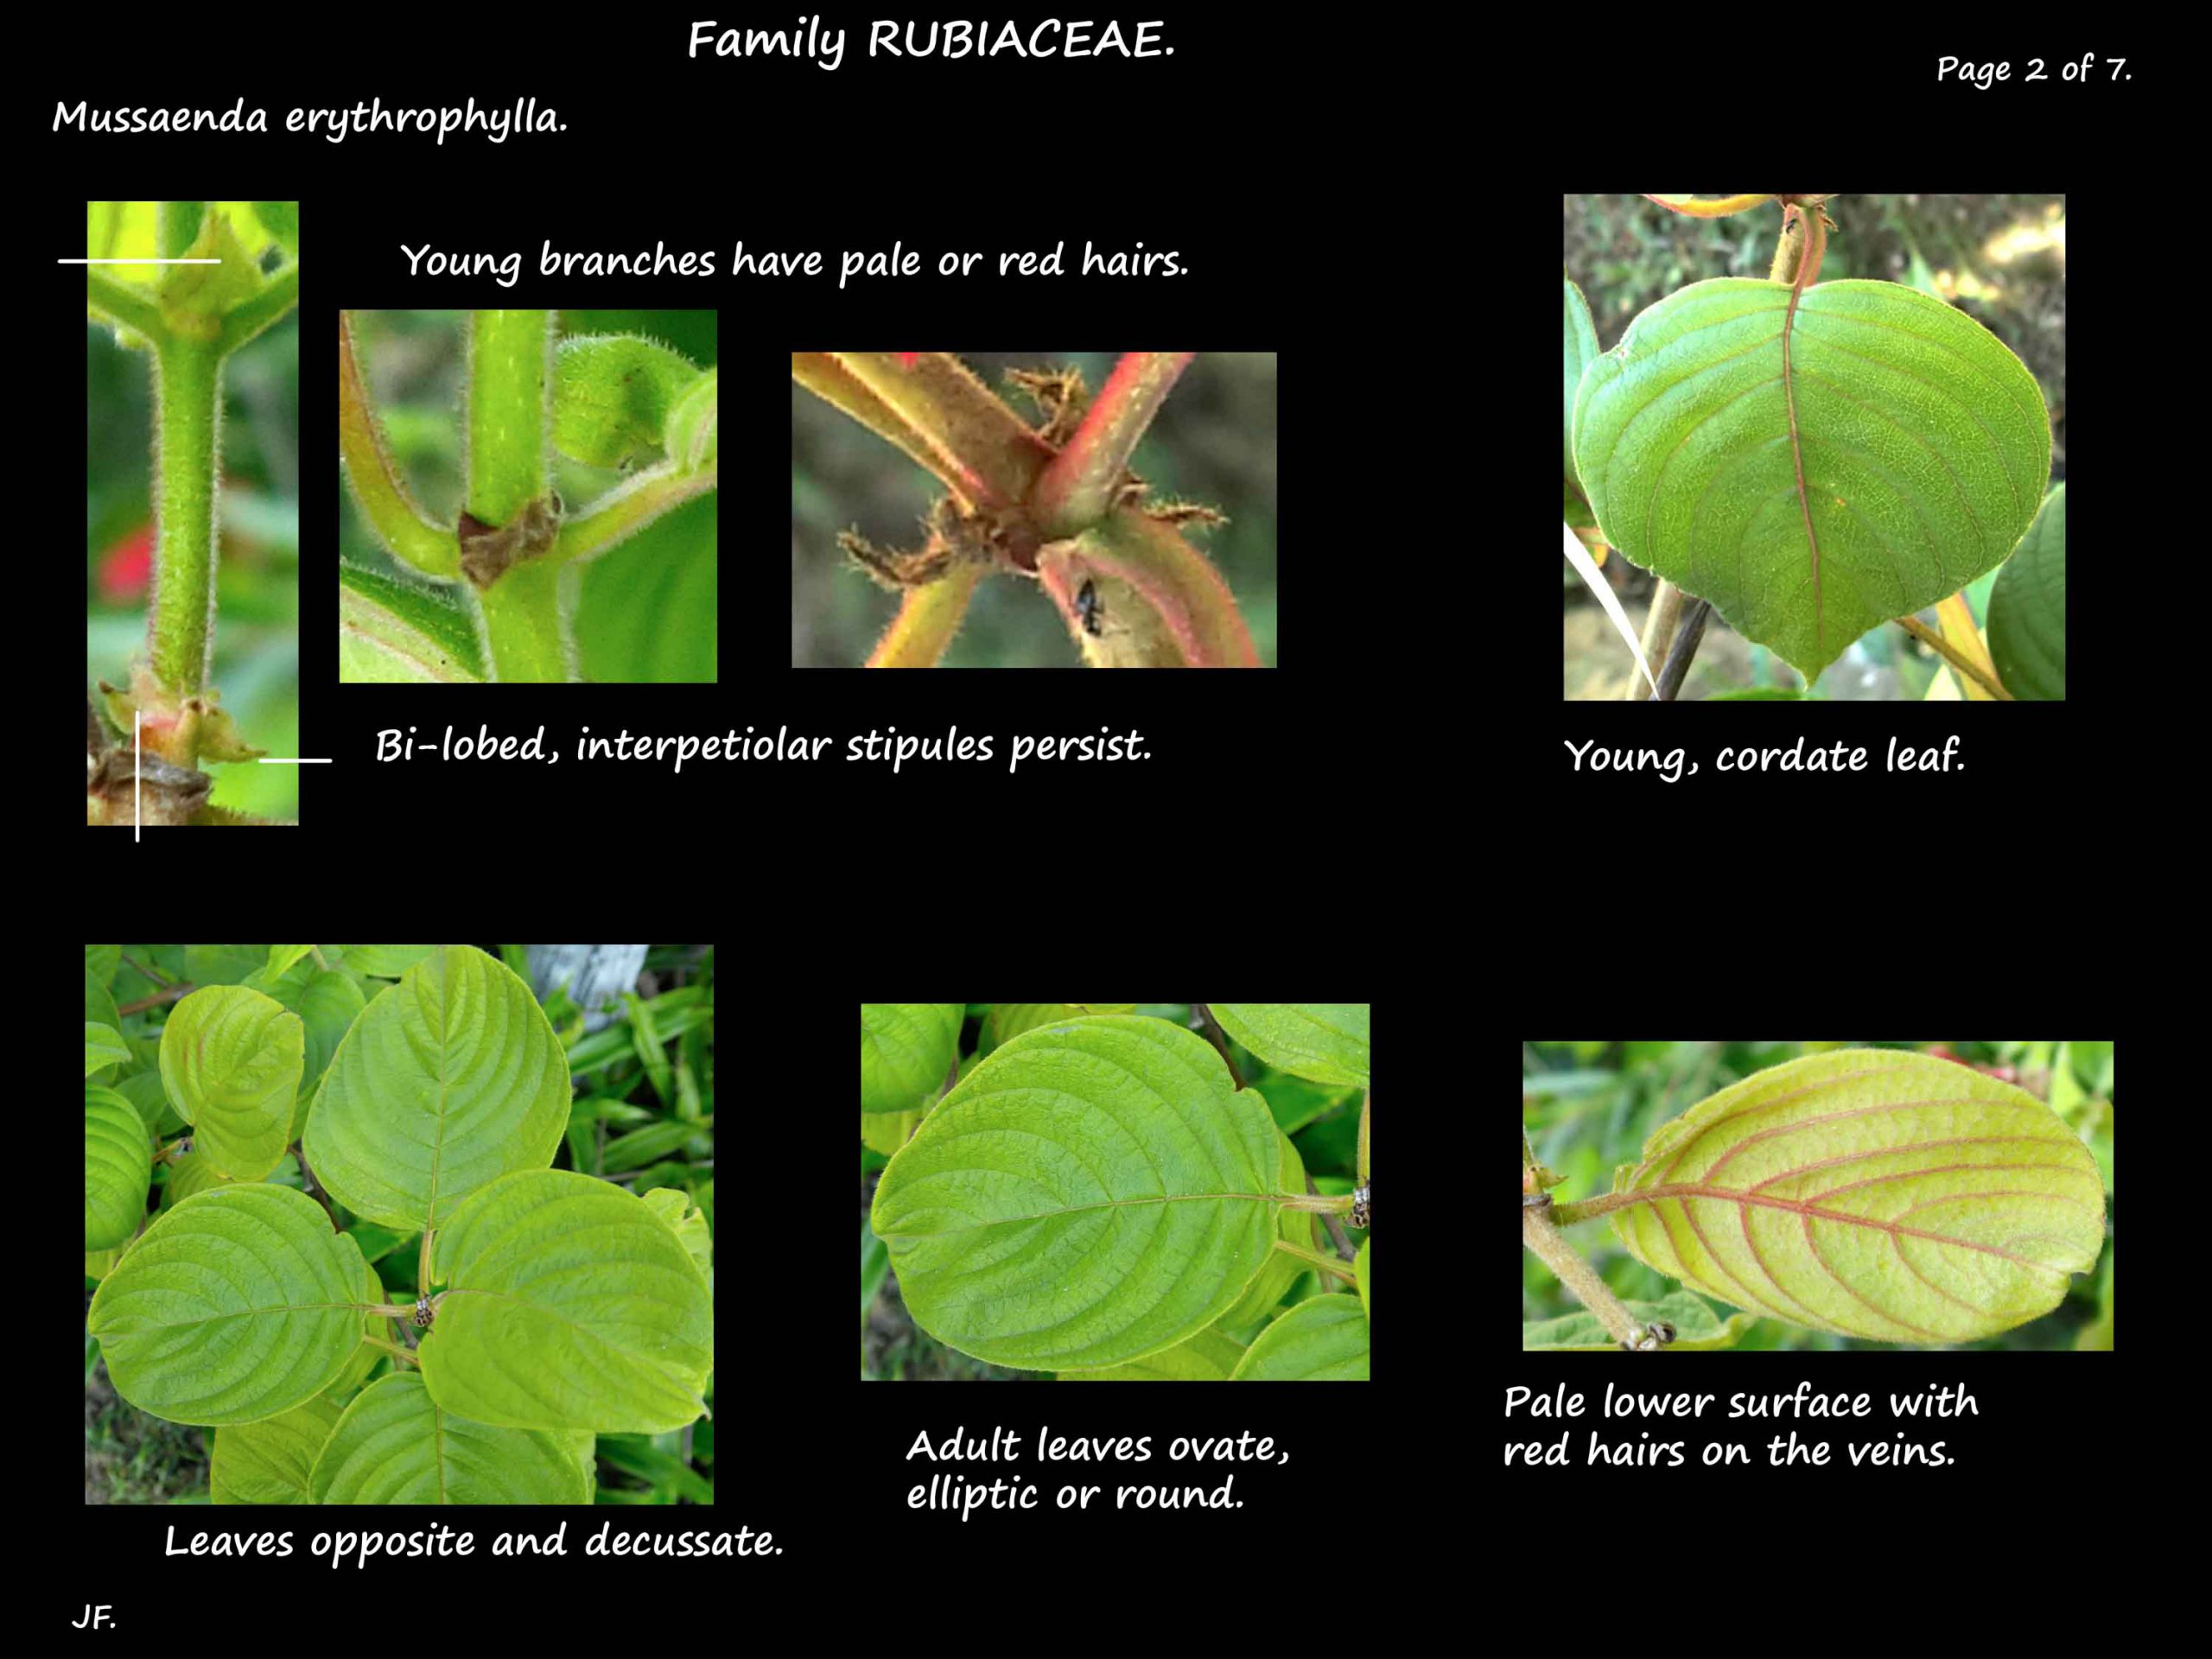 2 Mussaenda erythrophylla leaves